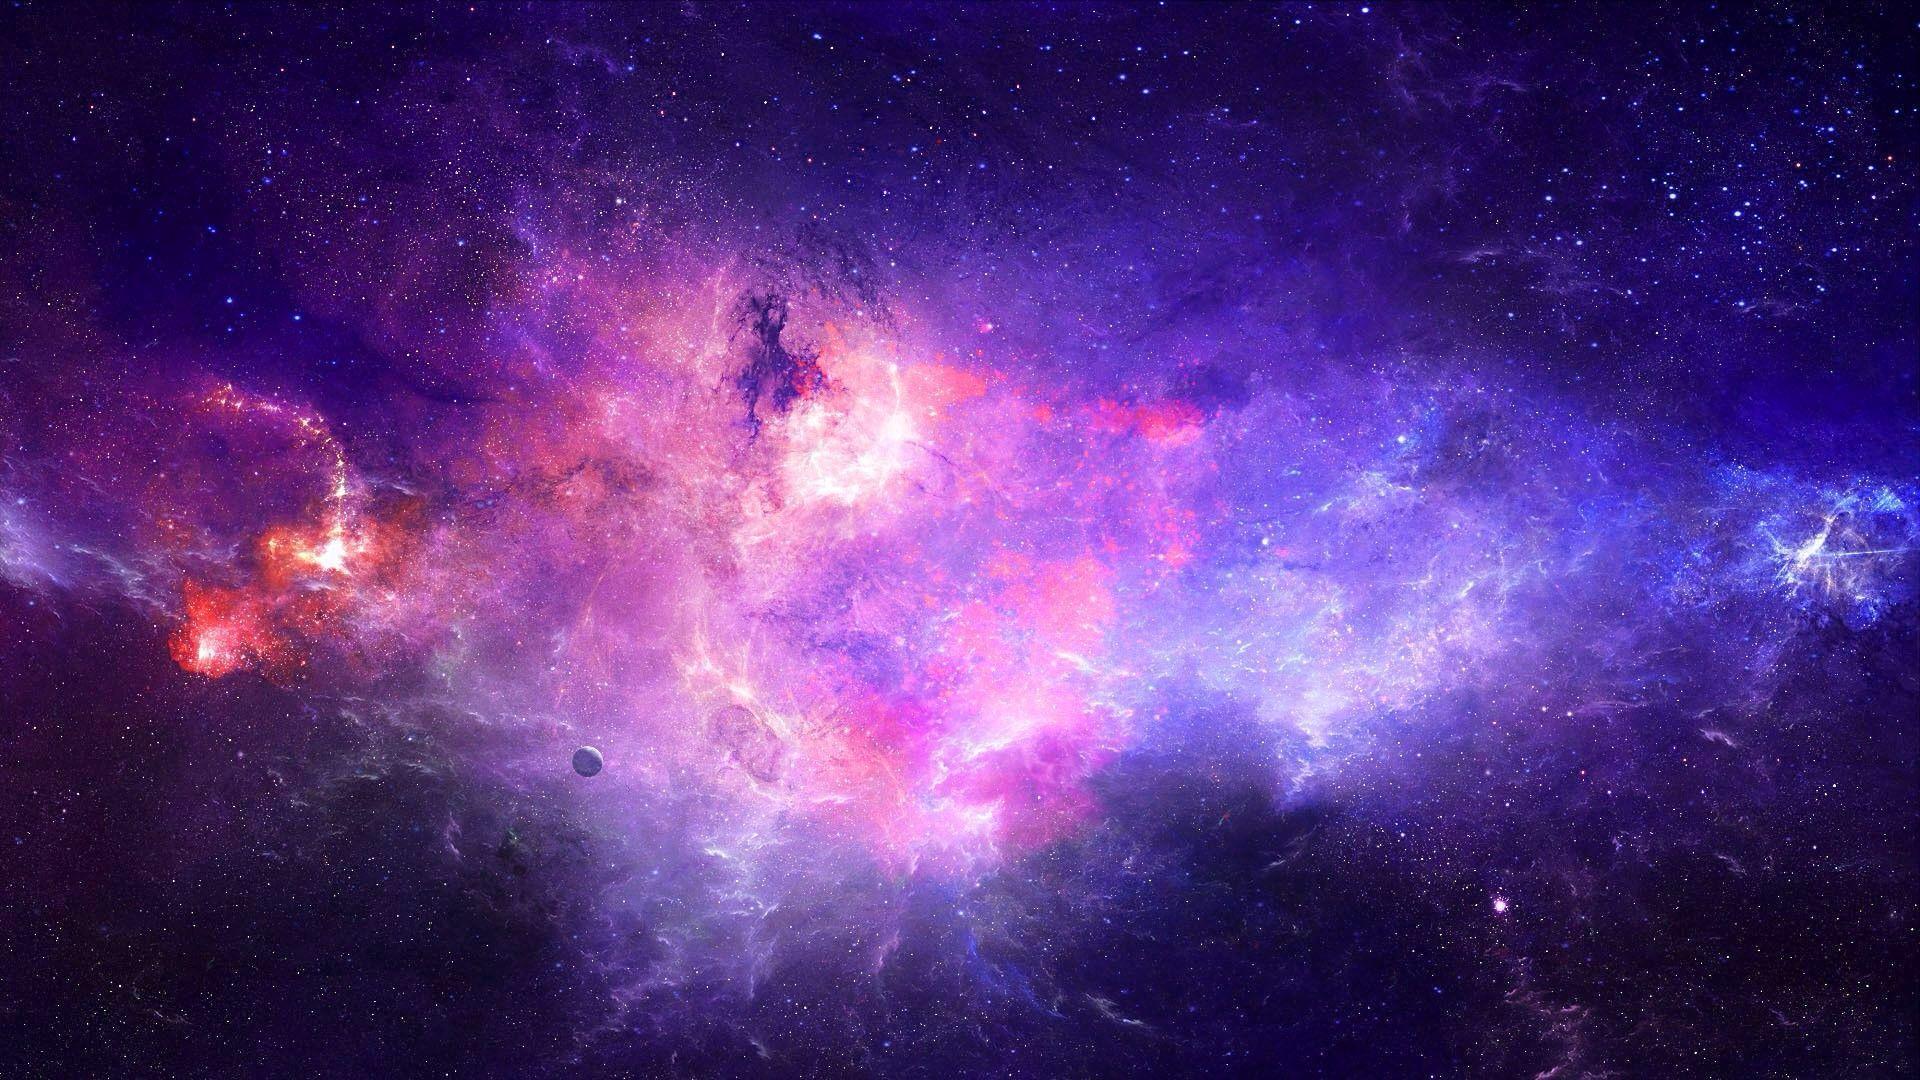 Galaxy. HD galaxy wallpaper, Galaxy wallpaper, Laptop wallpaper